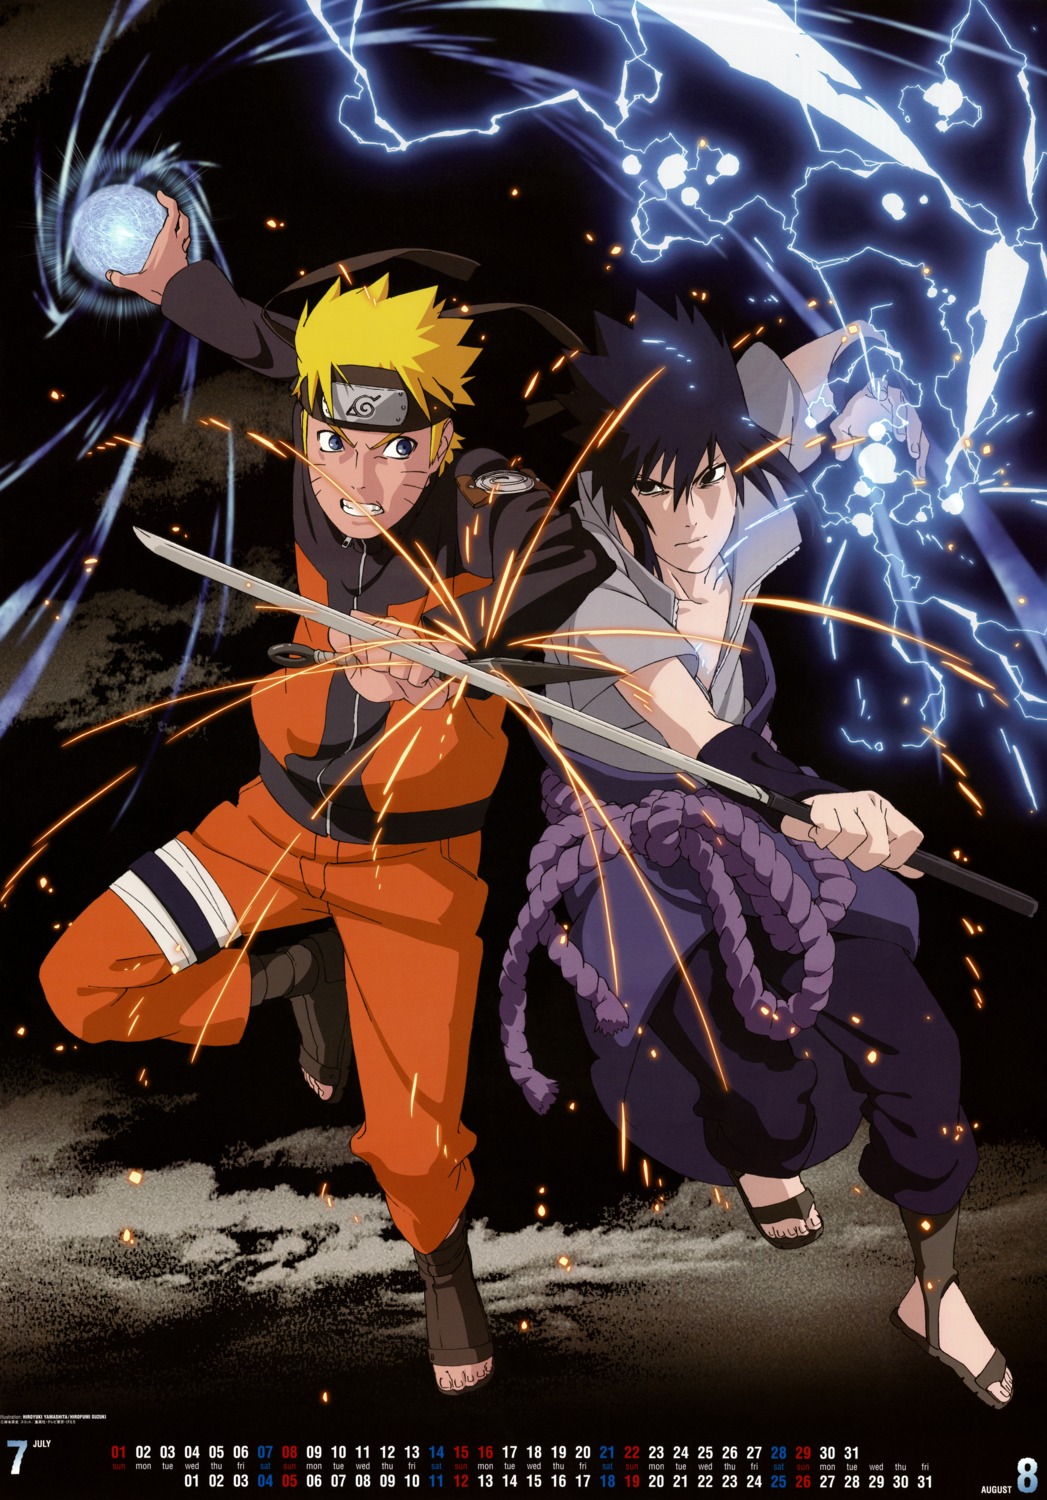 HD wallpaper: male anime character holding swrod, Naruto Shippuuden, Uchiha  Sasuke